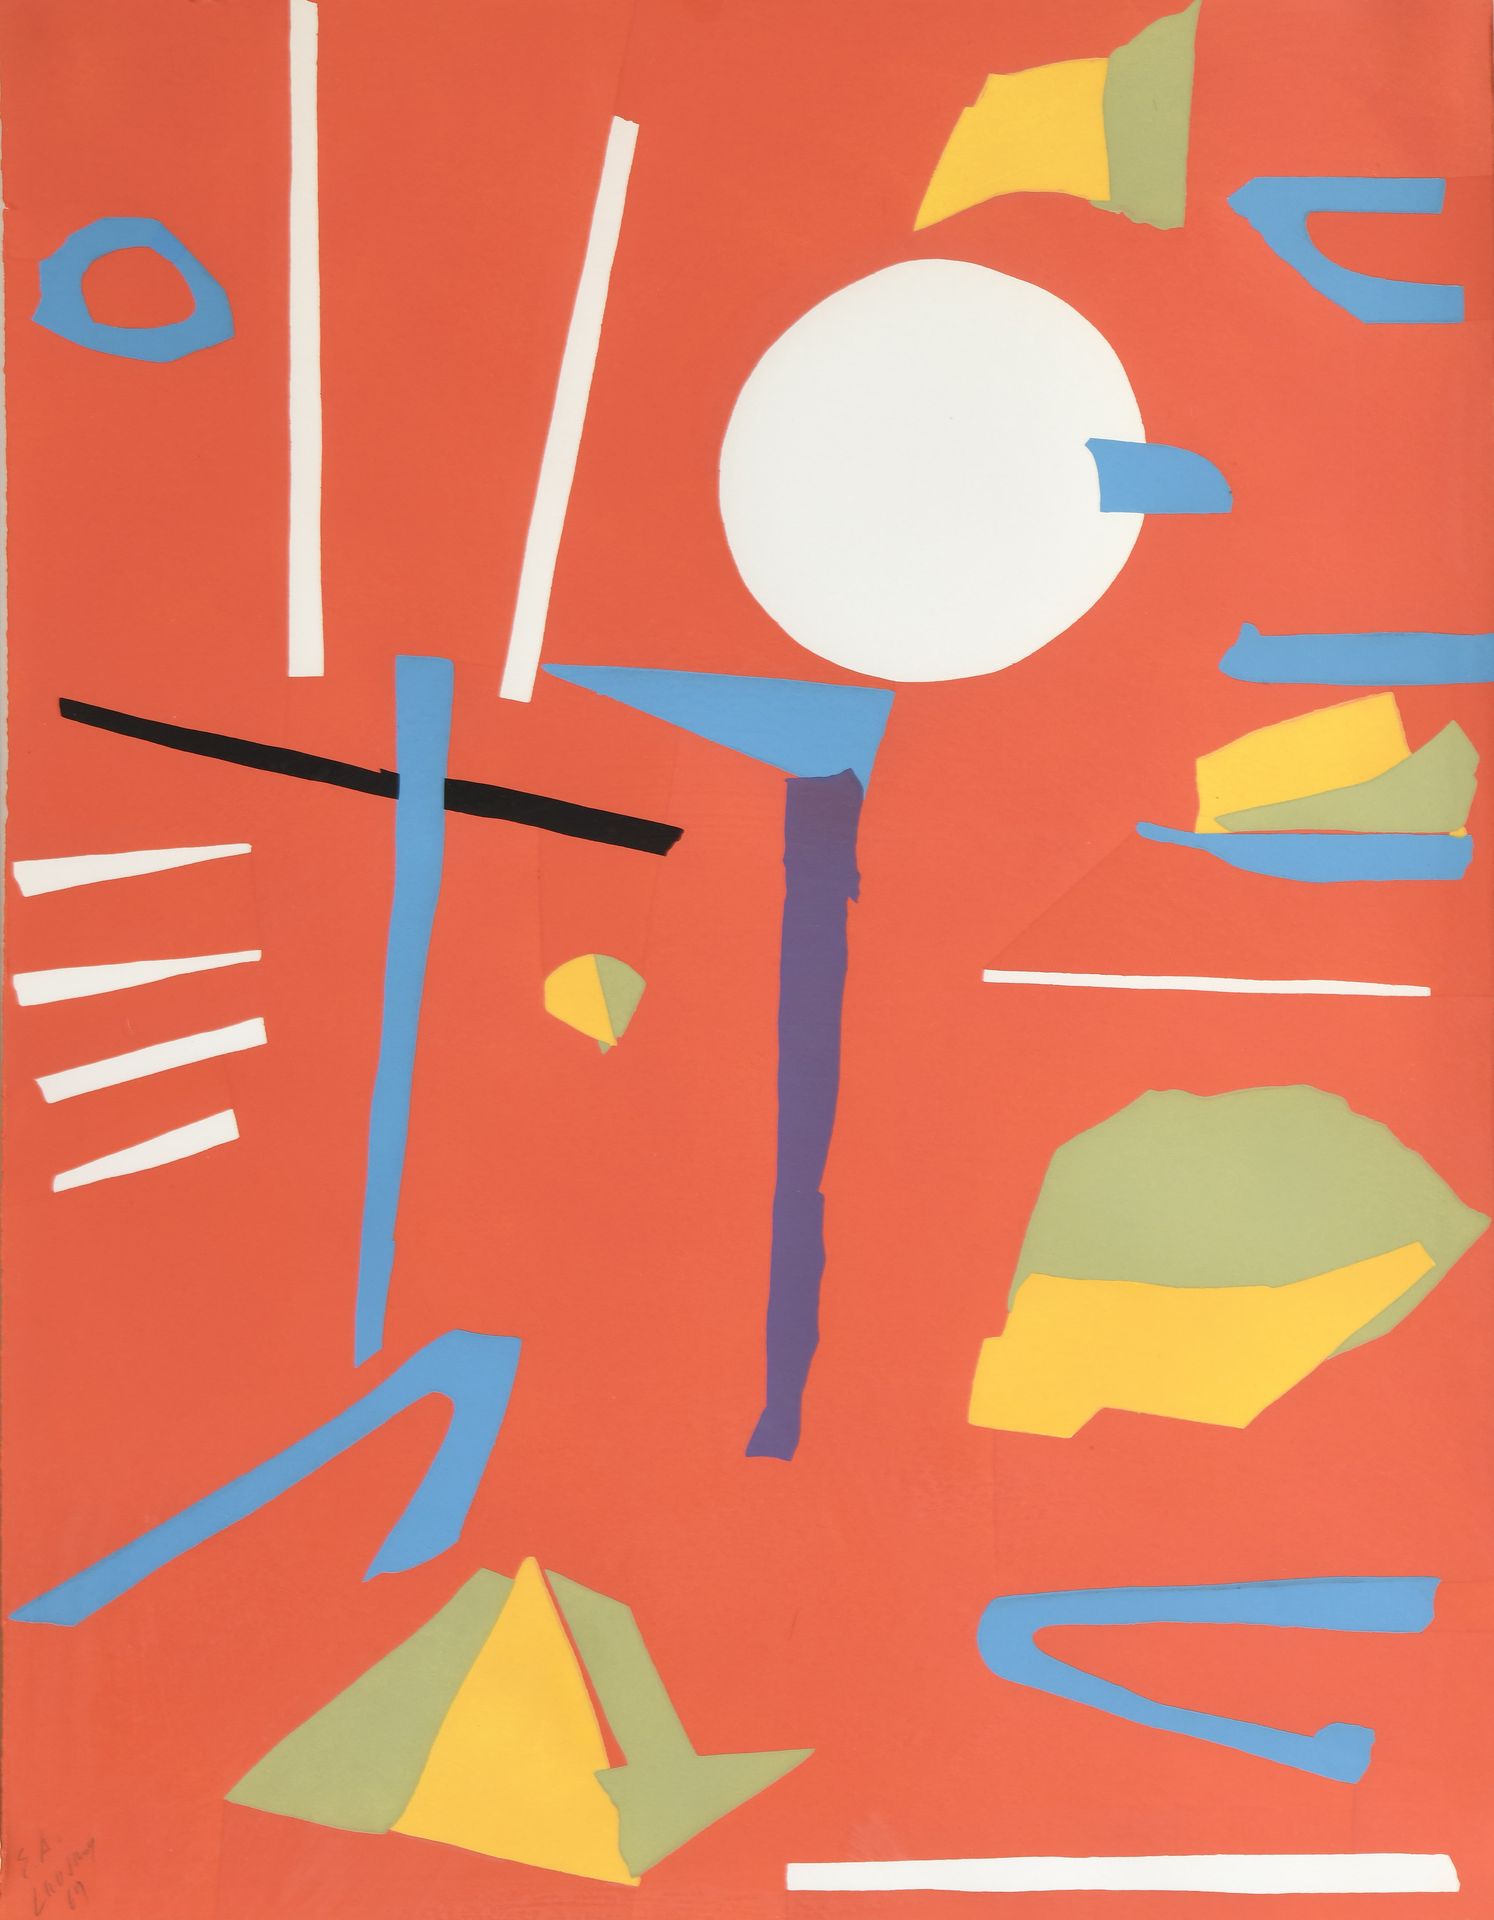 Null André LANSKOY (1903-1976)
无题，1969 
石版画，左下角有签名、日期和正名EA。
65 x 50 cm